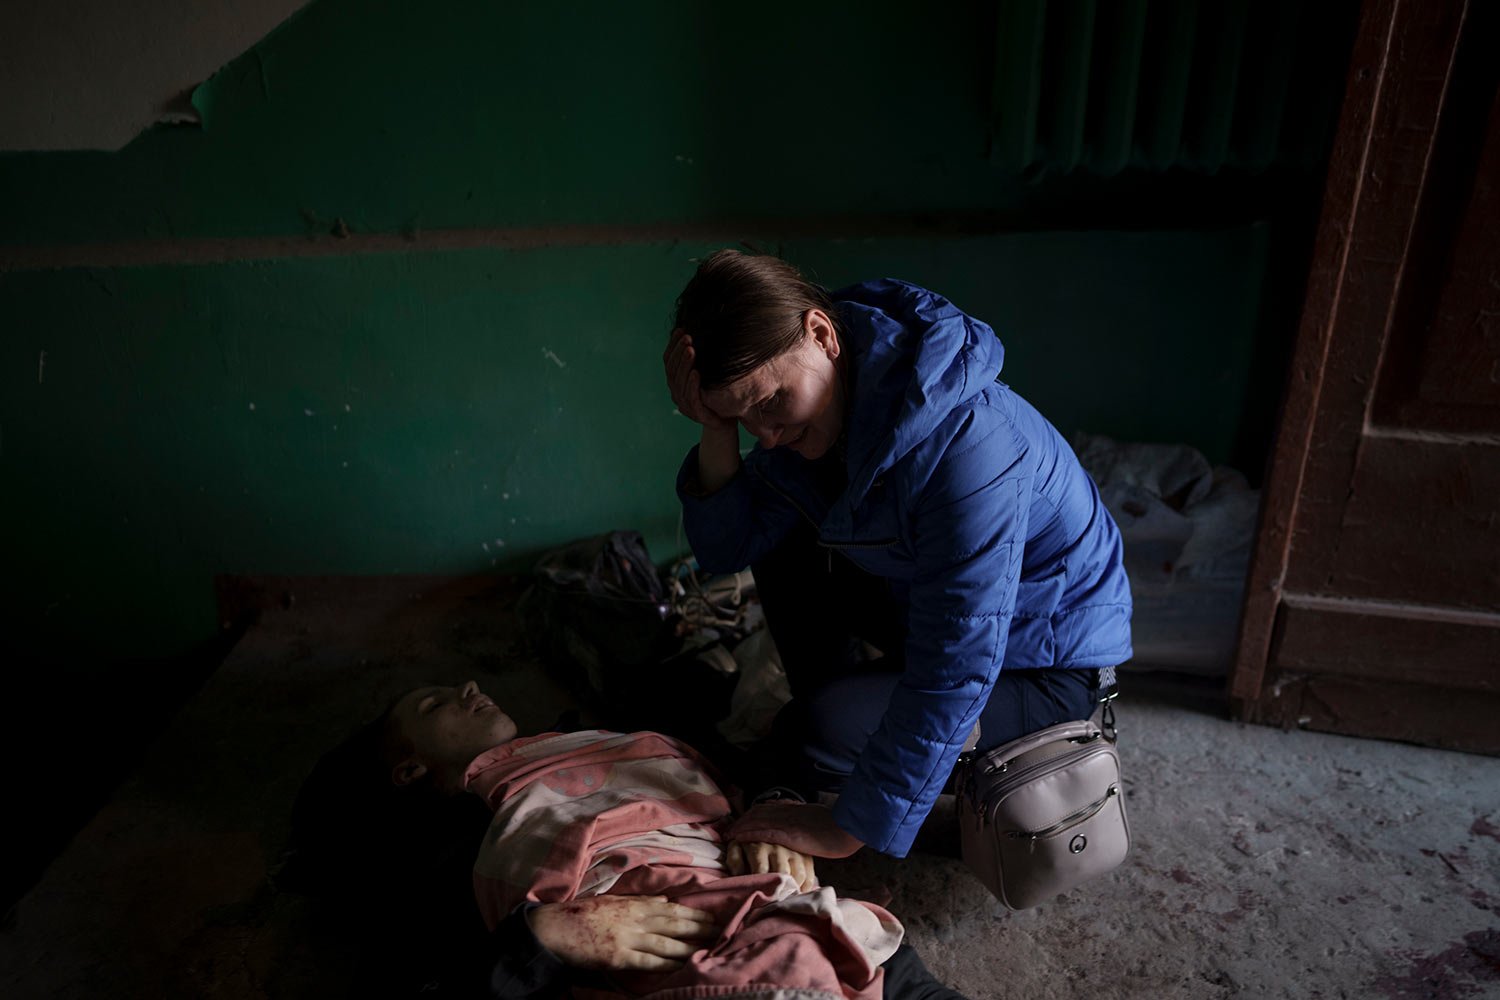  Nina Shevchenko mourns next to the body of her 15-year-old son Artem Shevchenko, who was killed in a Russian attack in Kharkiv, Ukraine, Friday, April 15, 2022. (AP Photo/Felipe Dana)  